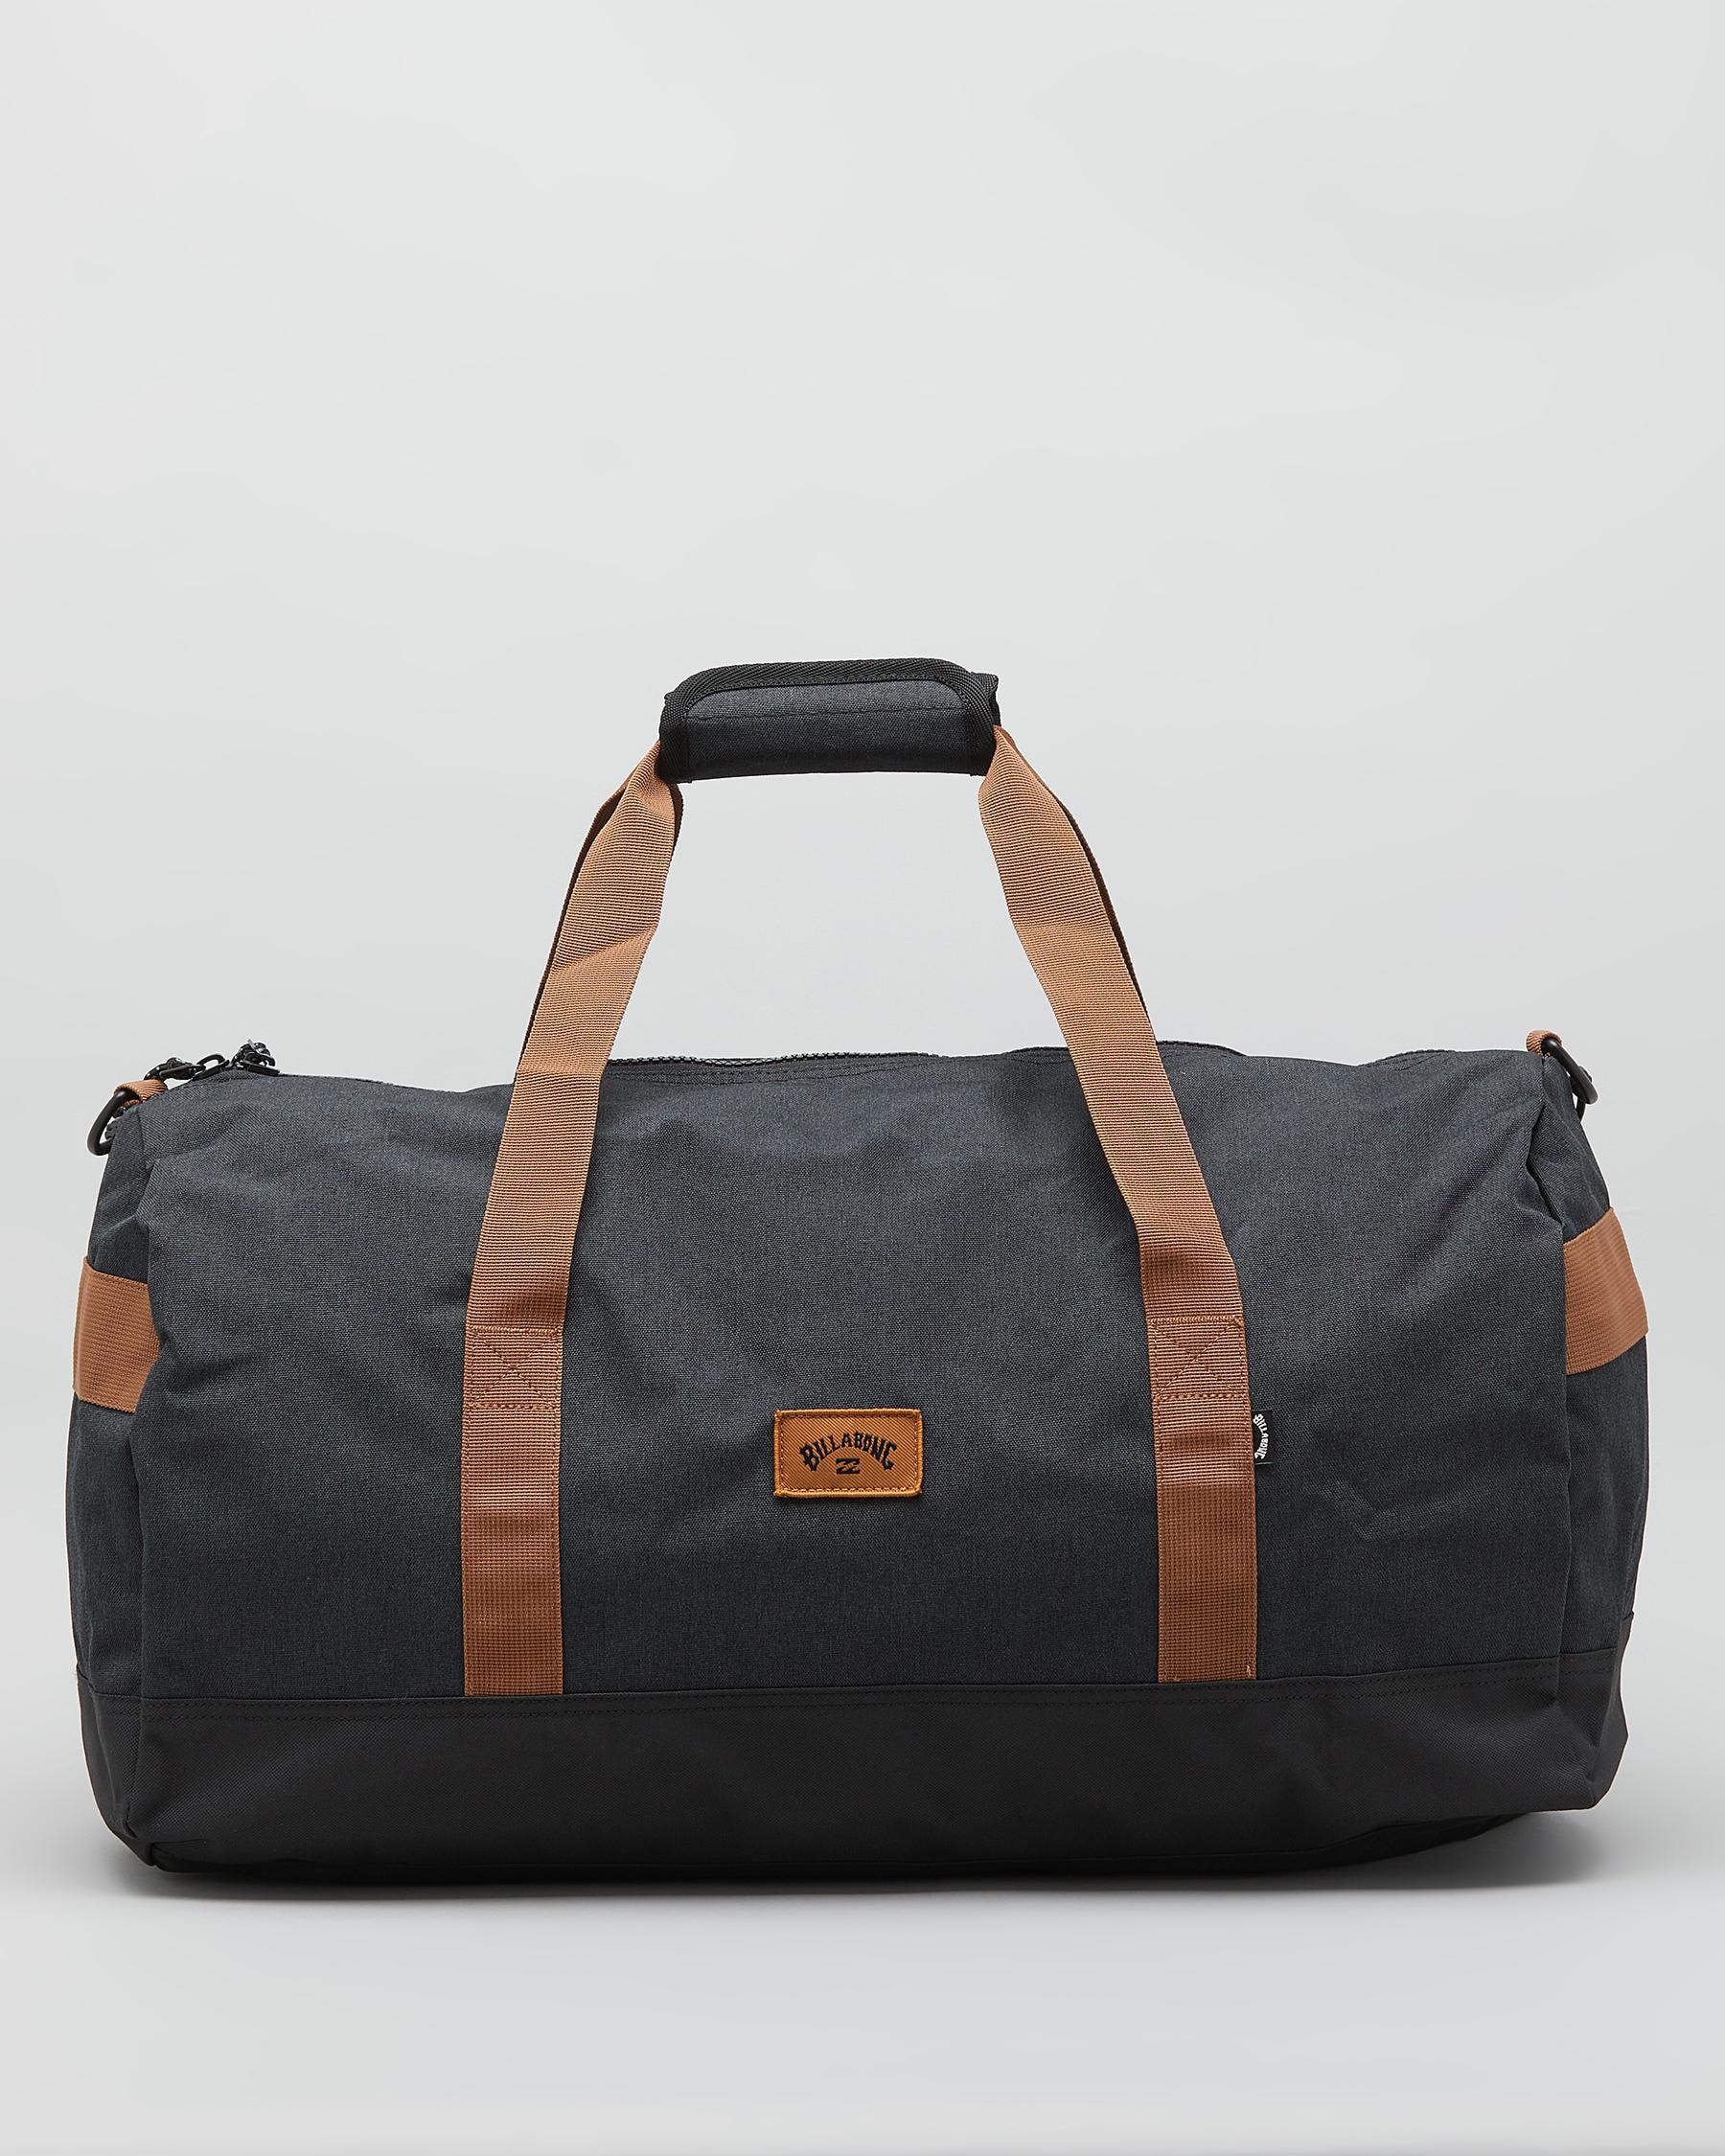 Billabong Transit Duffle Bag In Black/tan - Fast Shipping & Easy ...